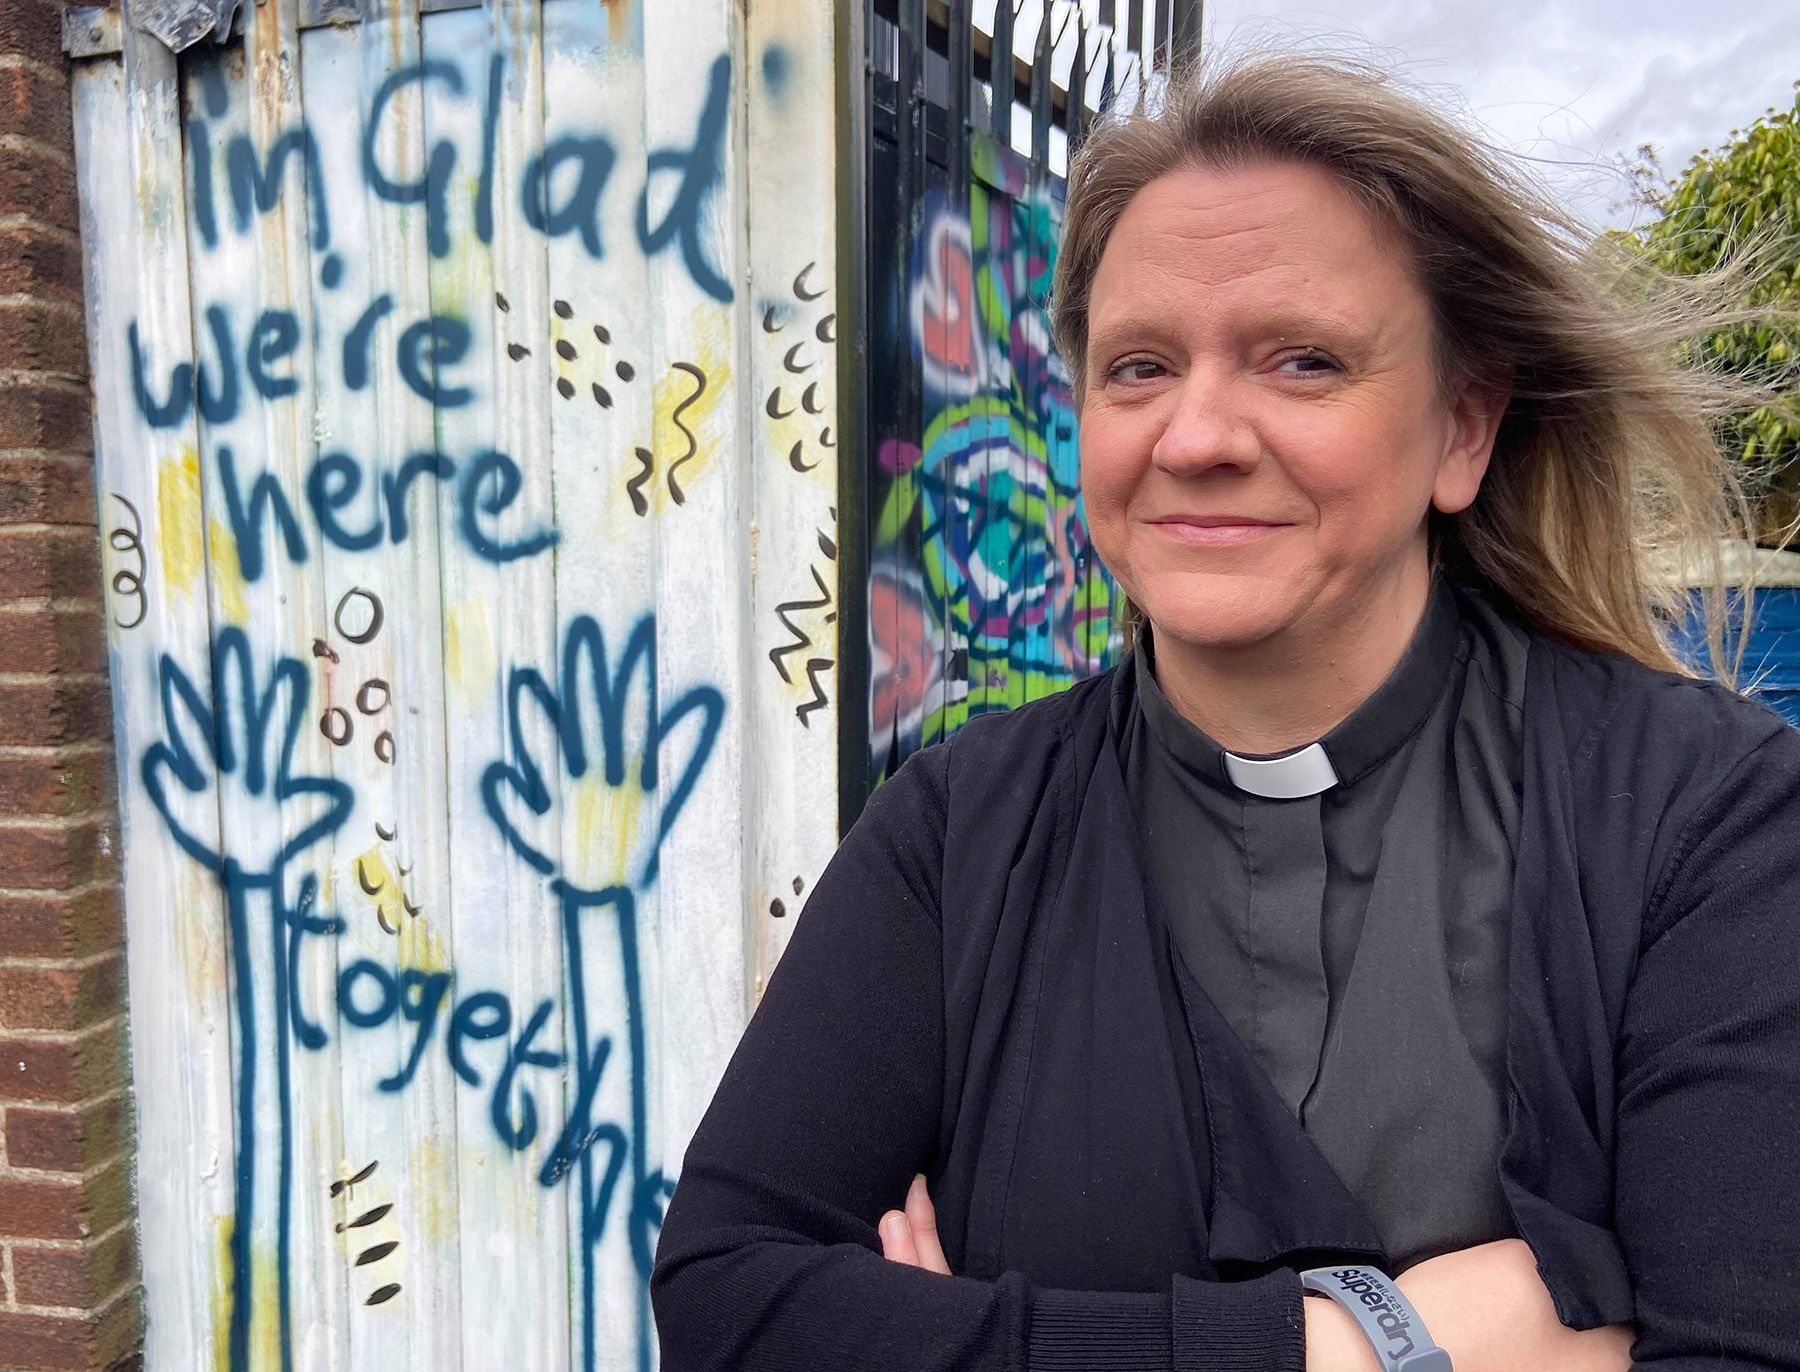 DUBLIN DATE: The Rev Karen is looking forward to the debate on October 1